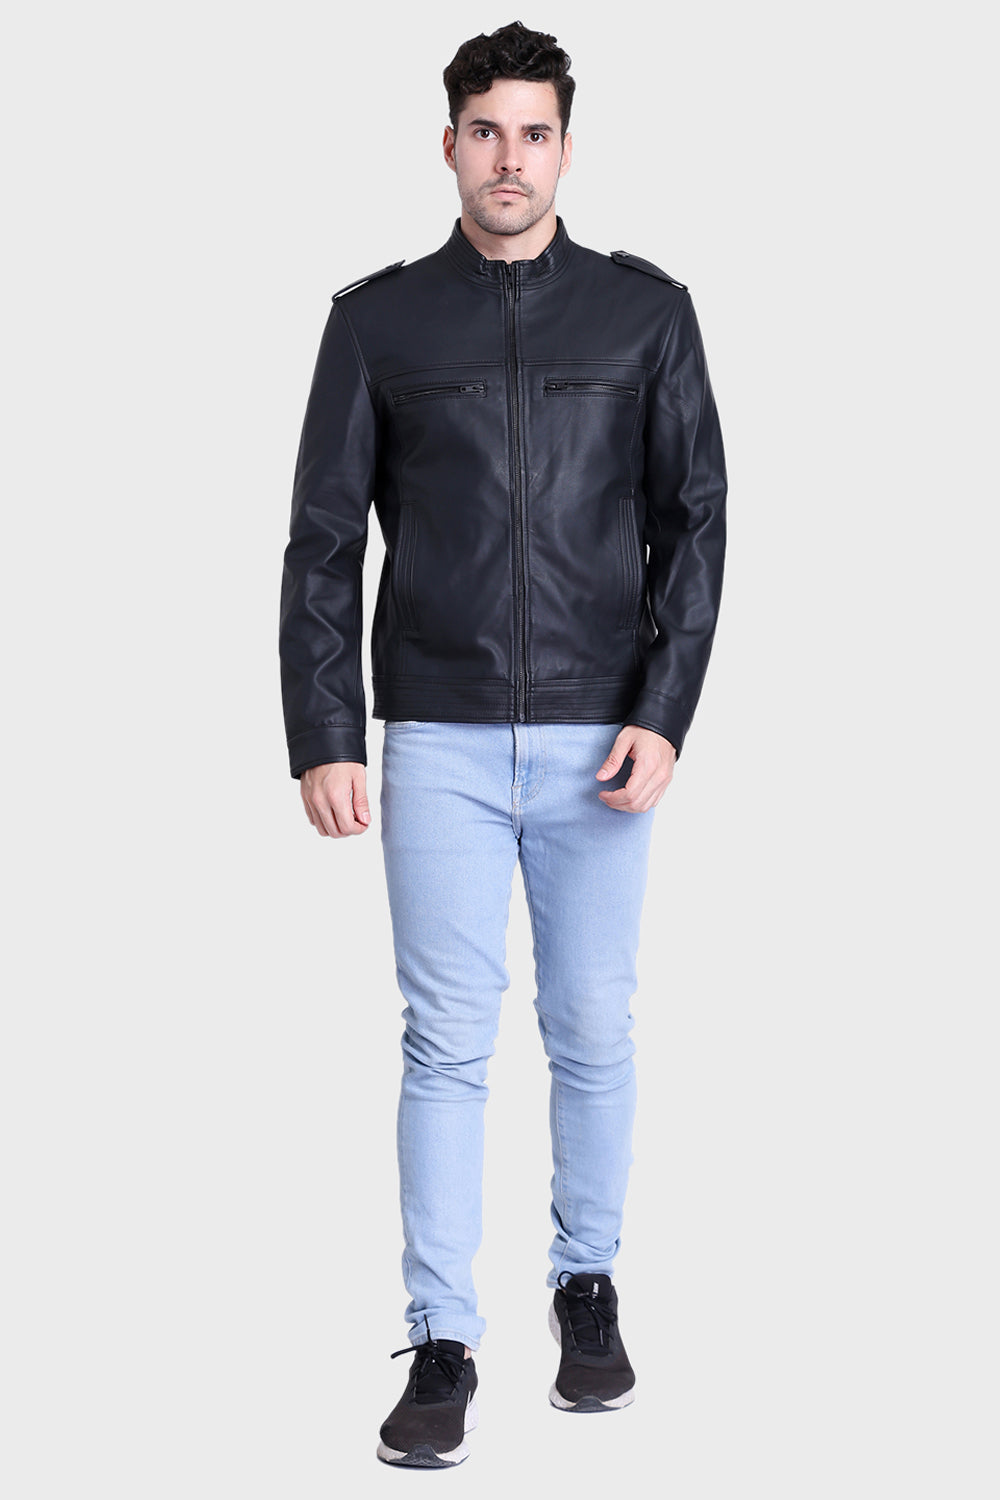 Justanned Matt Black Leather Jacket